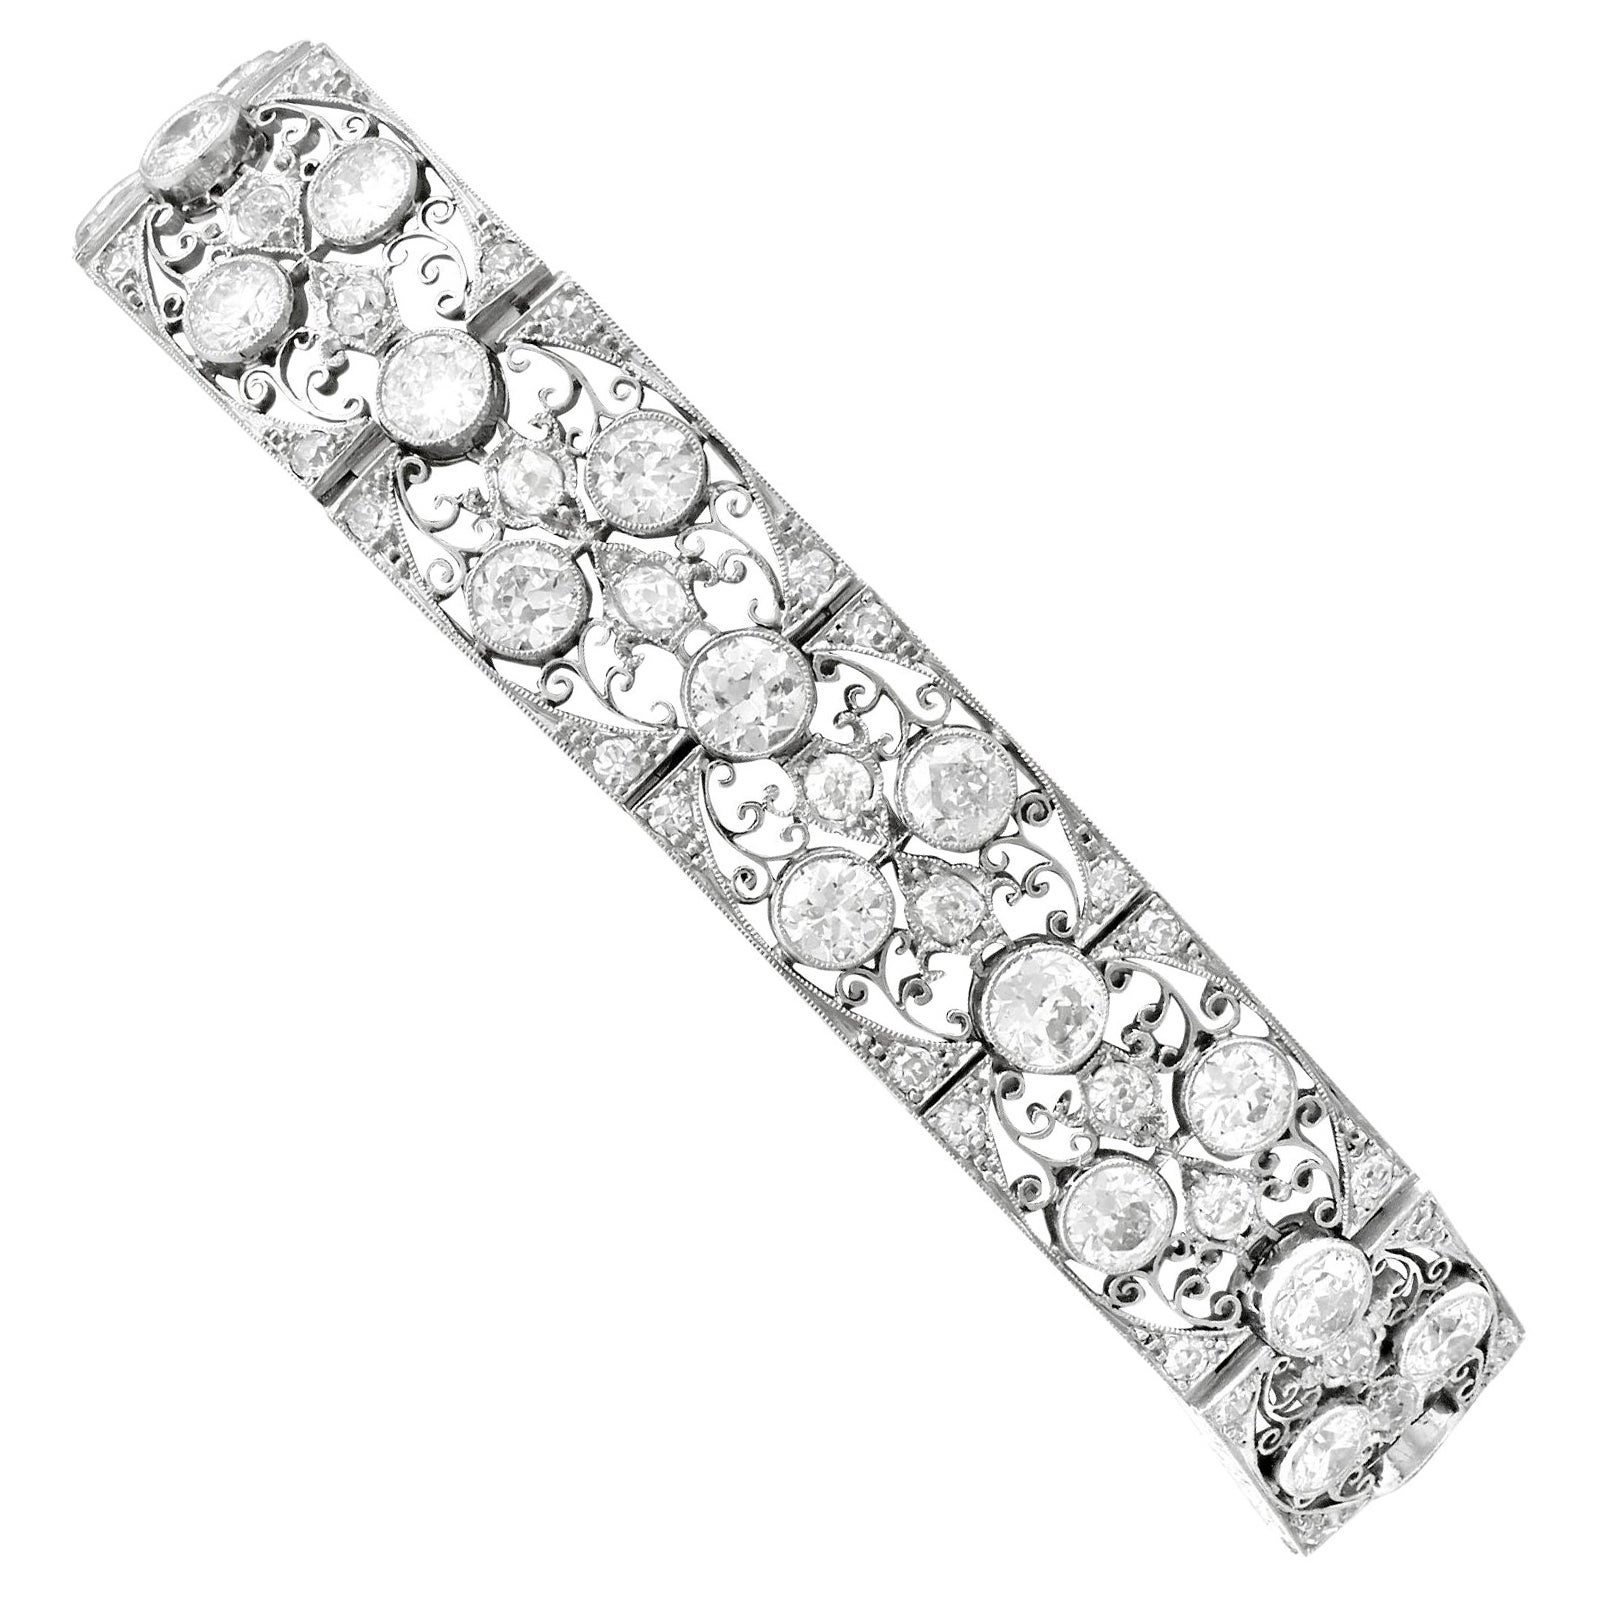 Antique 1920s French Import 15.80 Carat Diamond and Platinum Bracelet